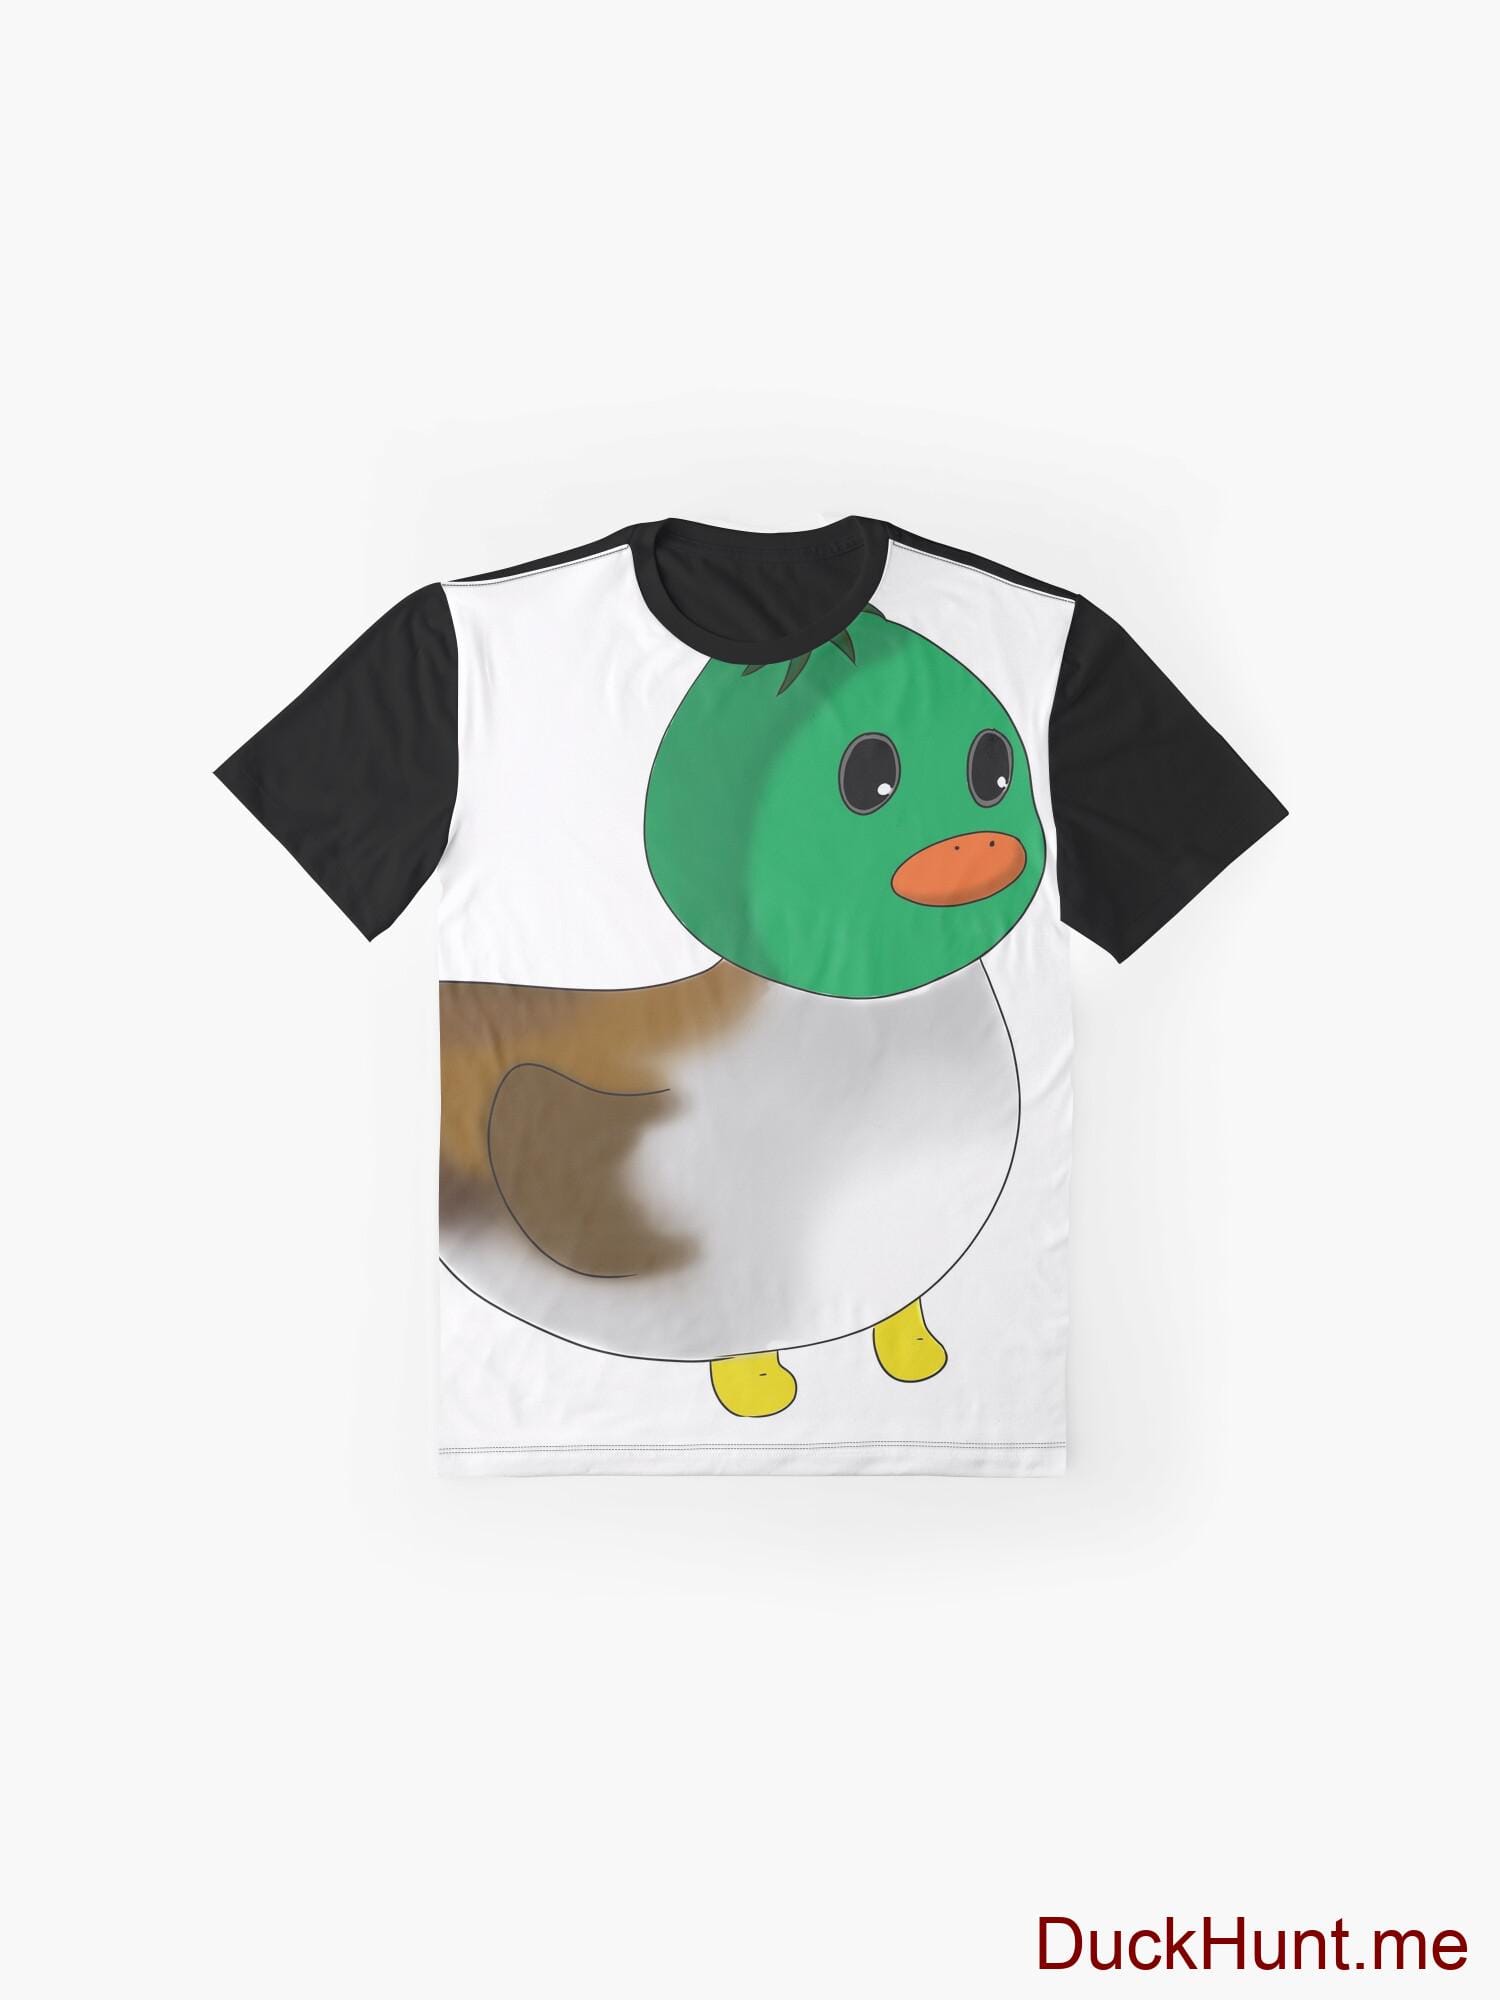 Normal Duck Black Graphic T-Shirt alternative image 3